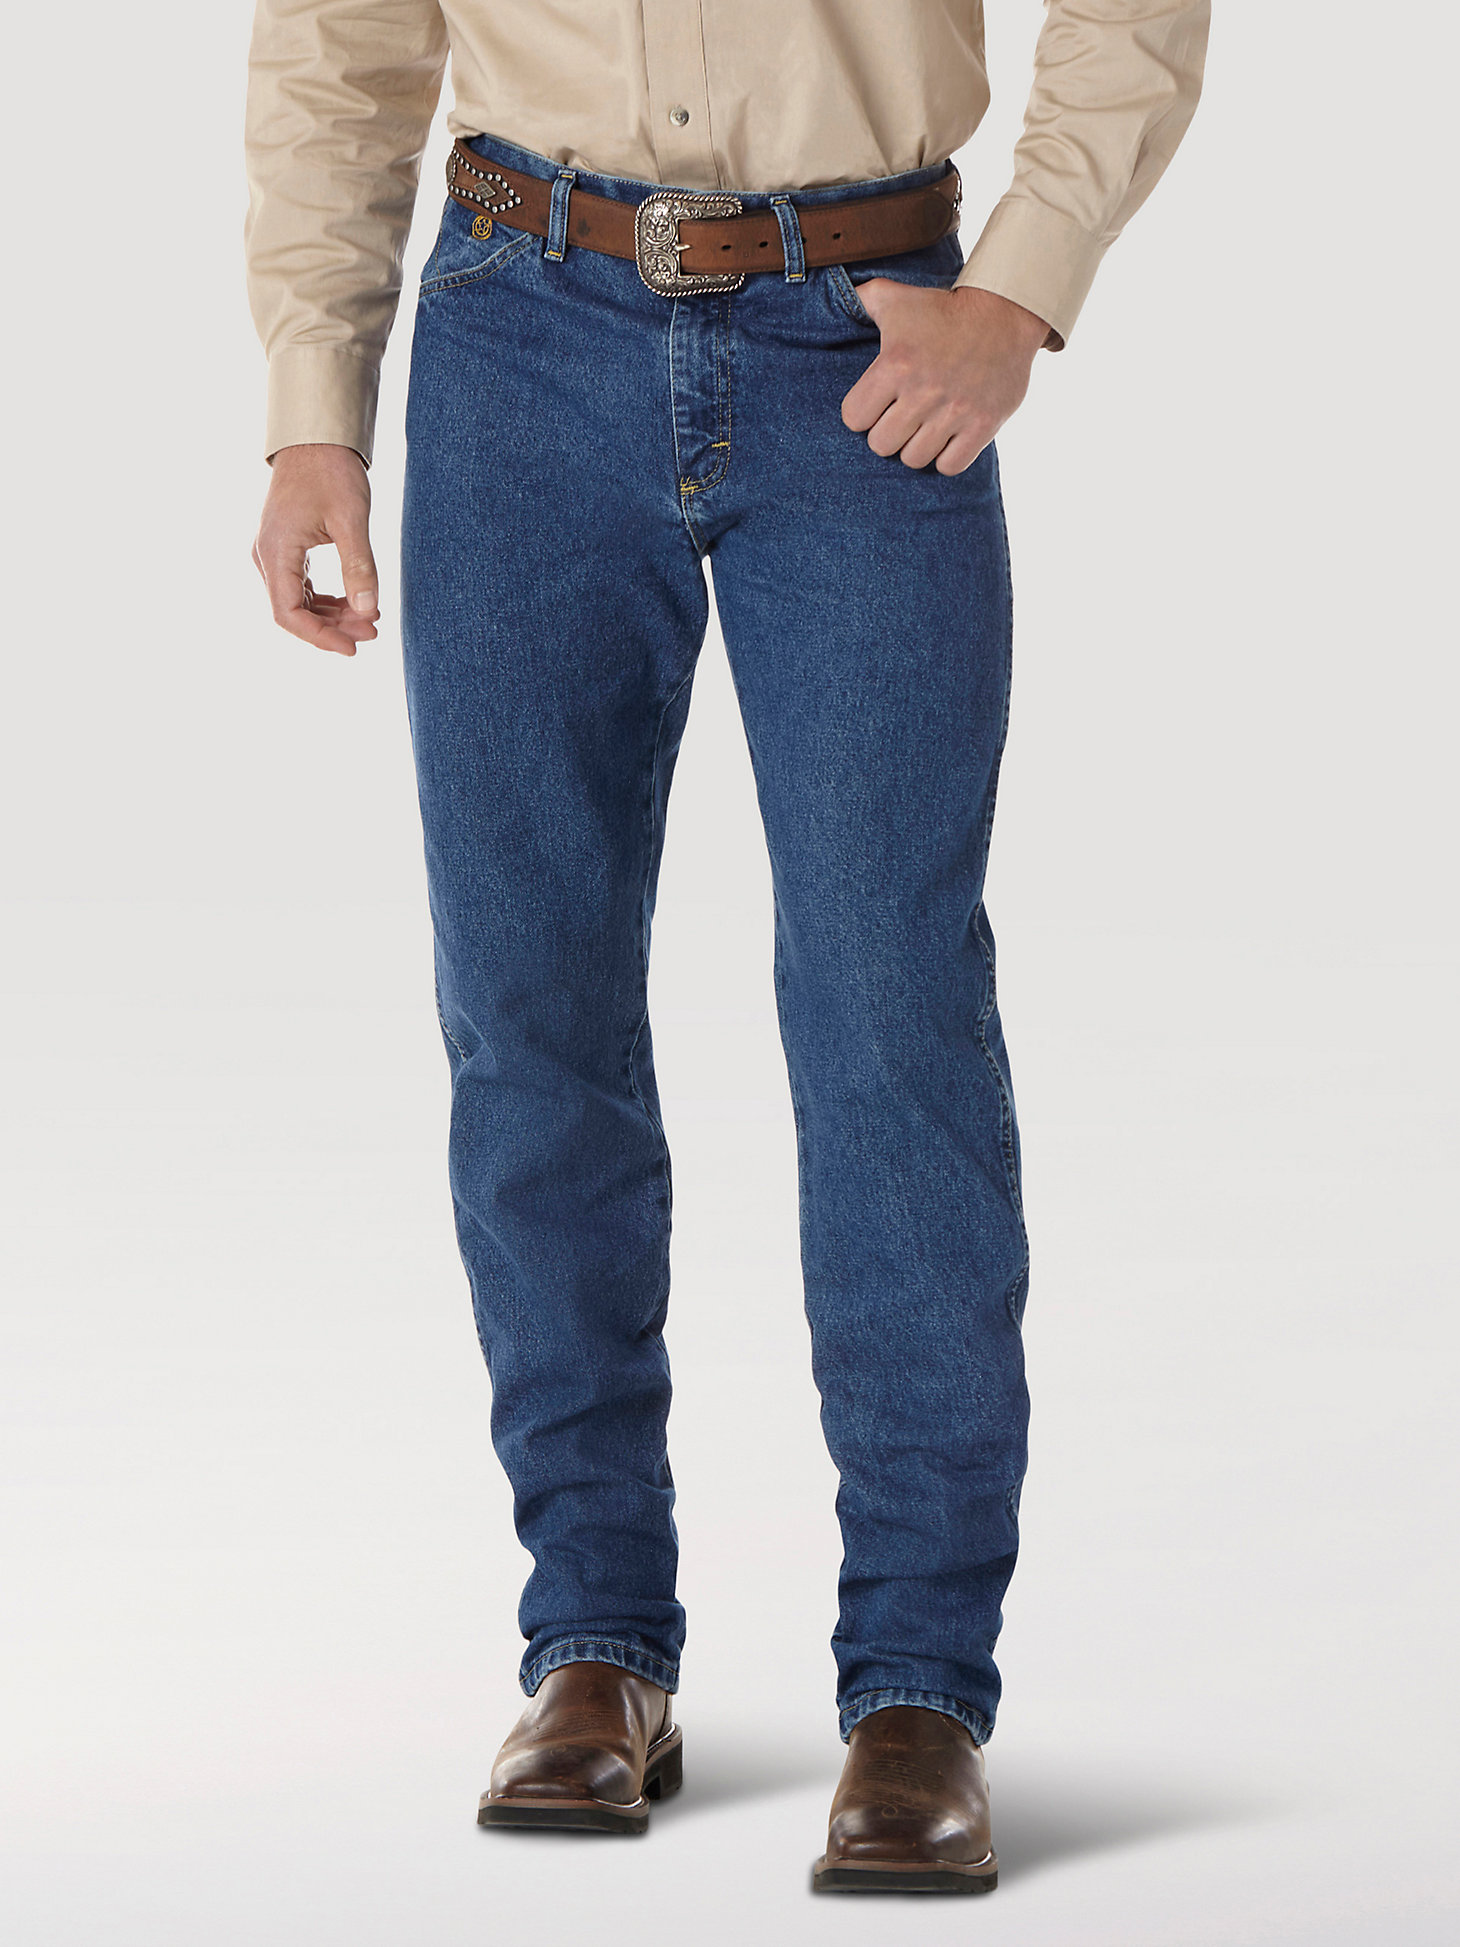 George Strait Cowboy Cut® Original Fit Jean in Heavyweight Stone Denim alternative view 3